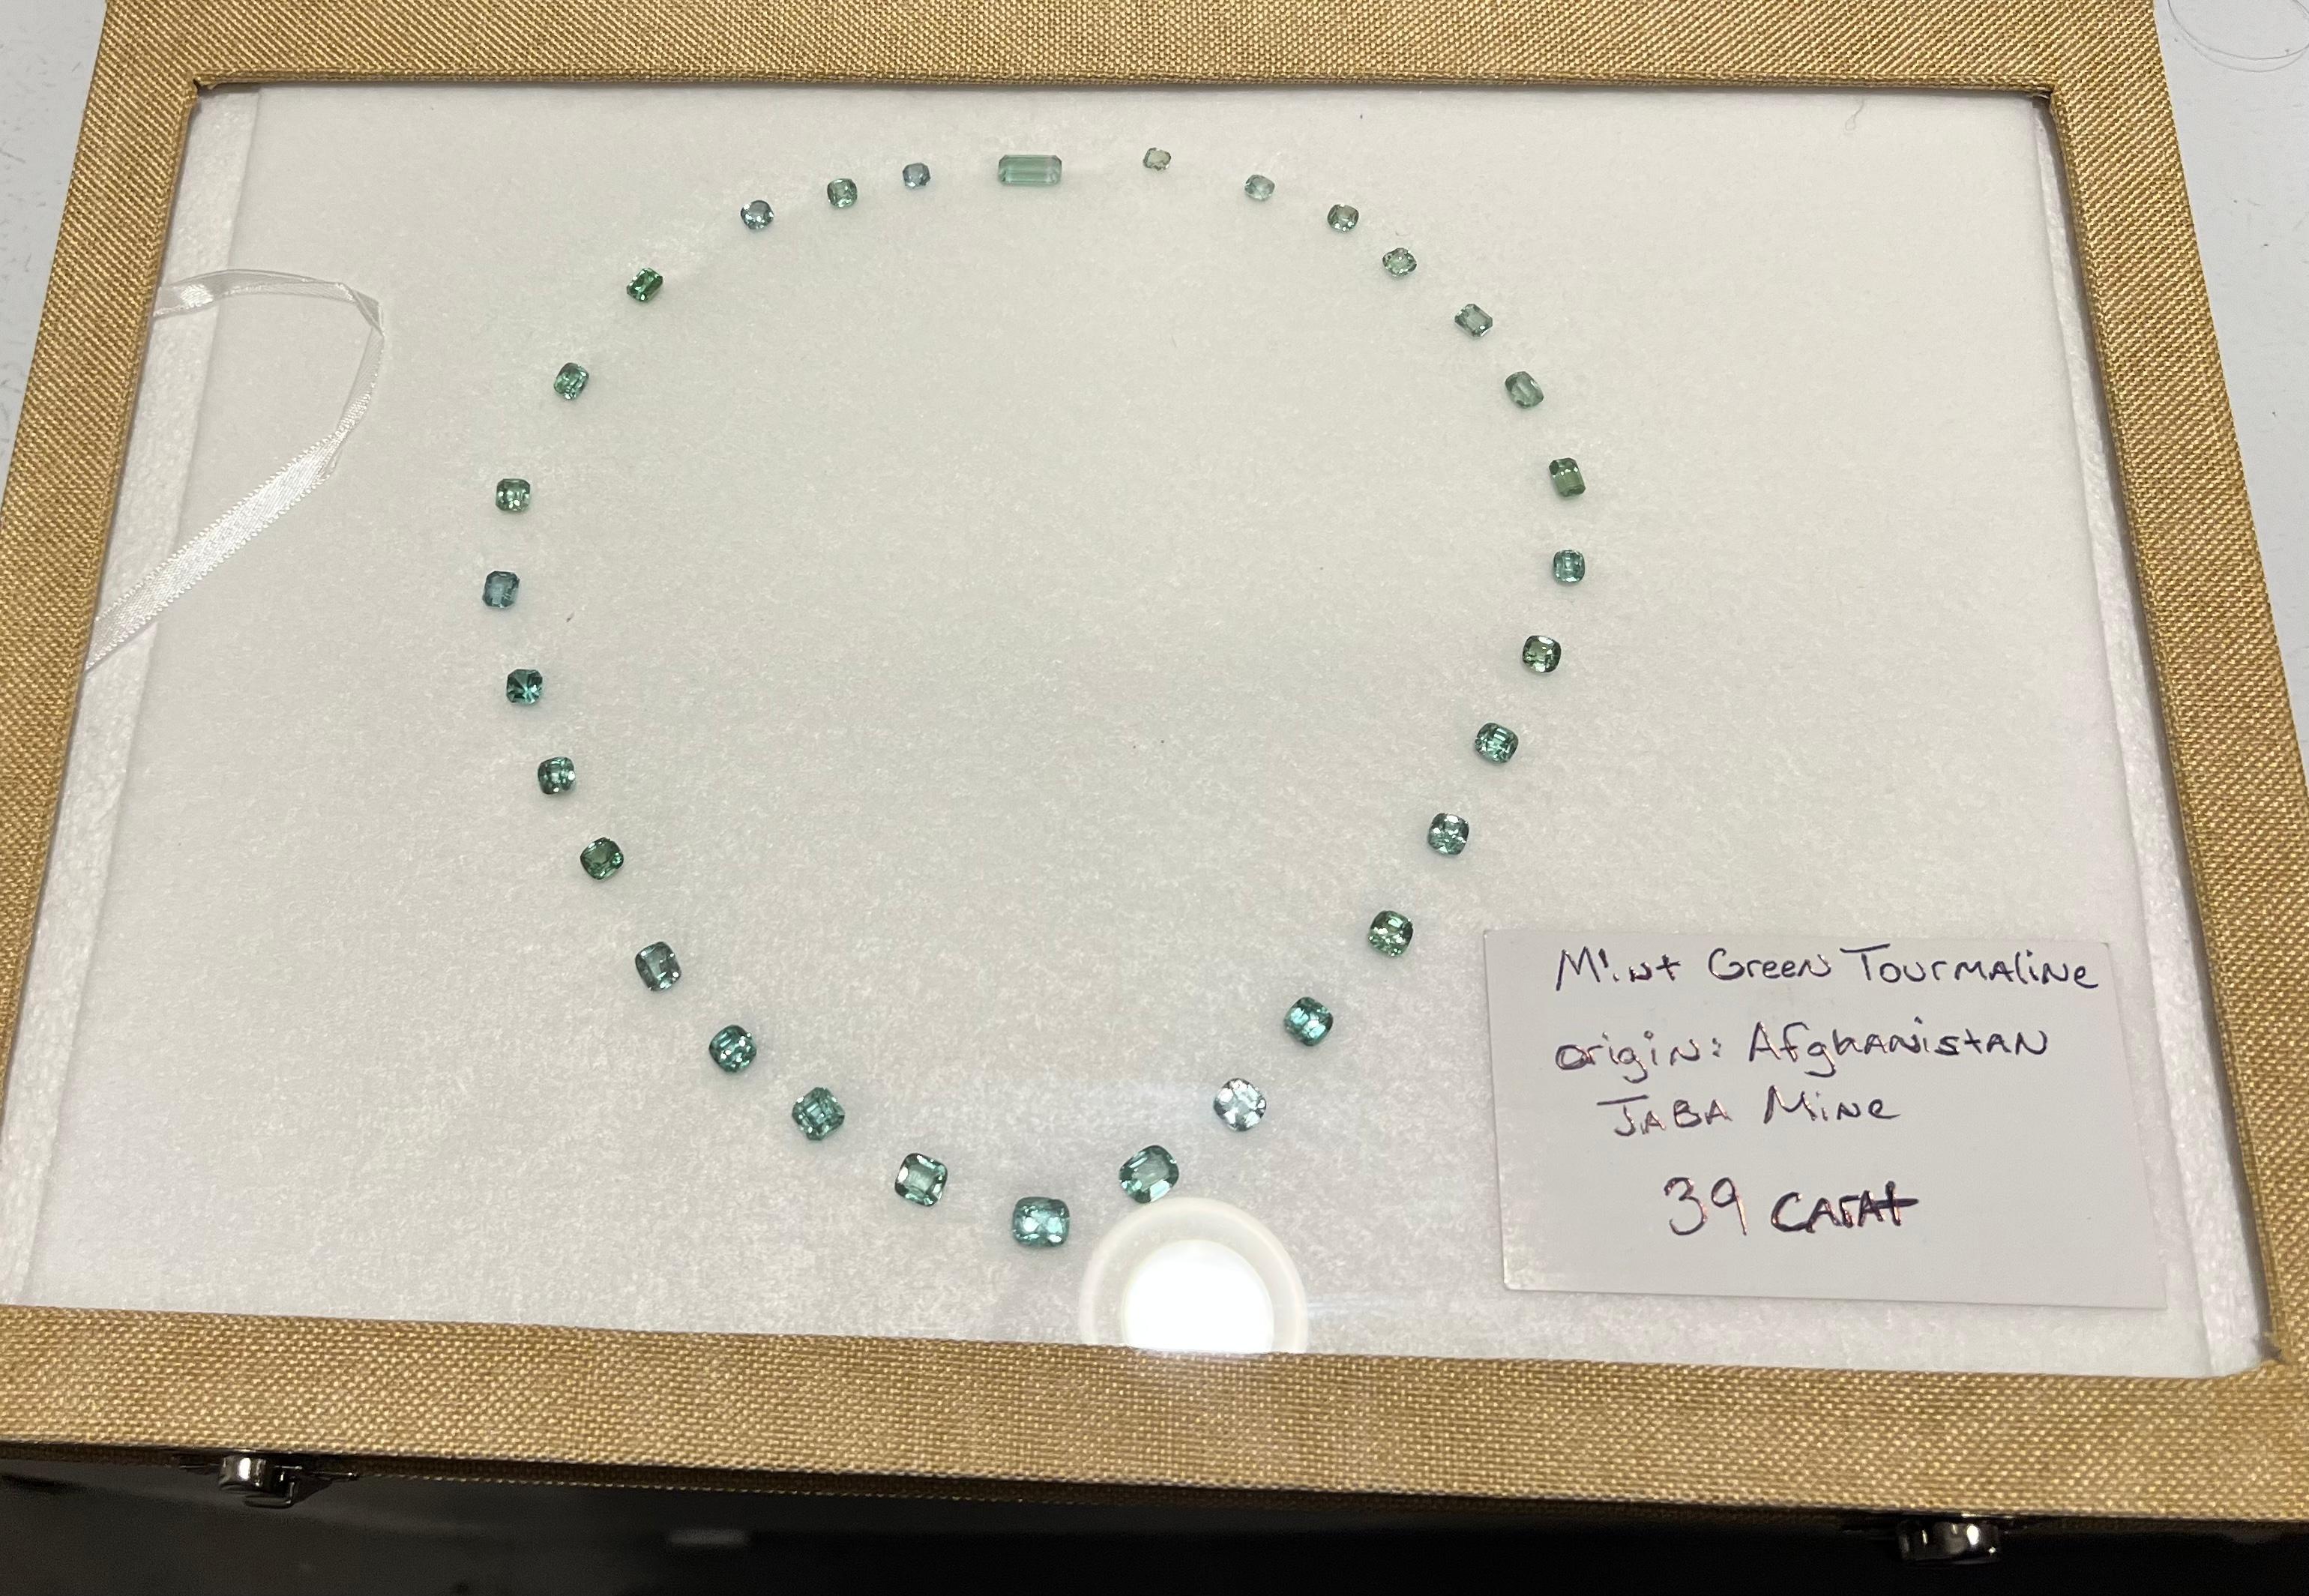 39 Carat Mint Green Tourmaline Gemstones for Necklace 1